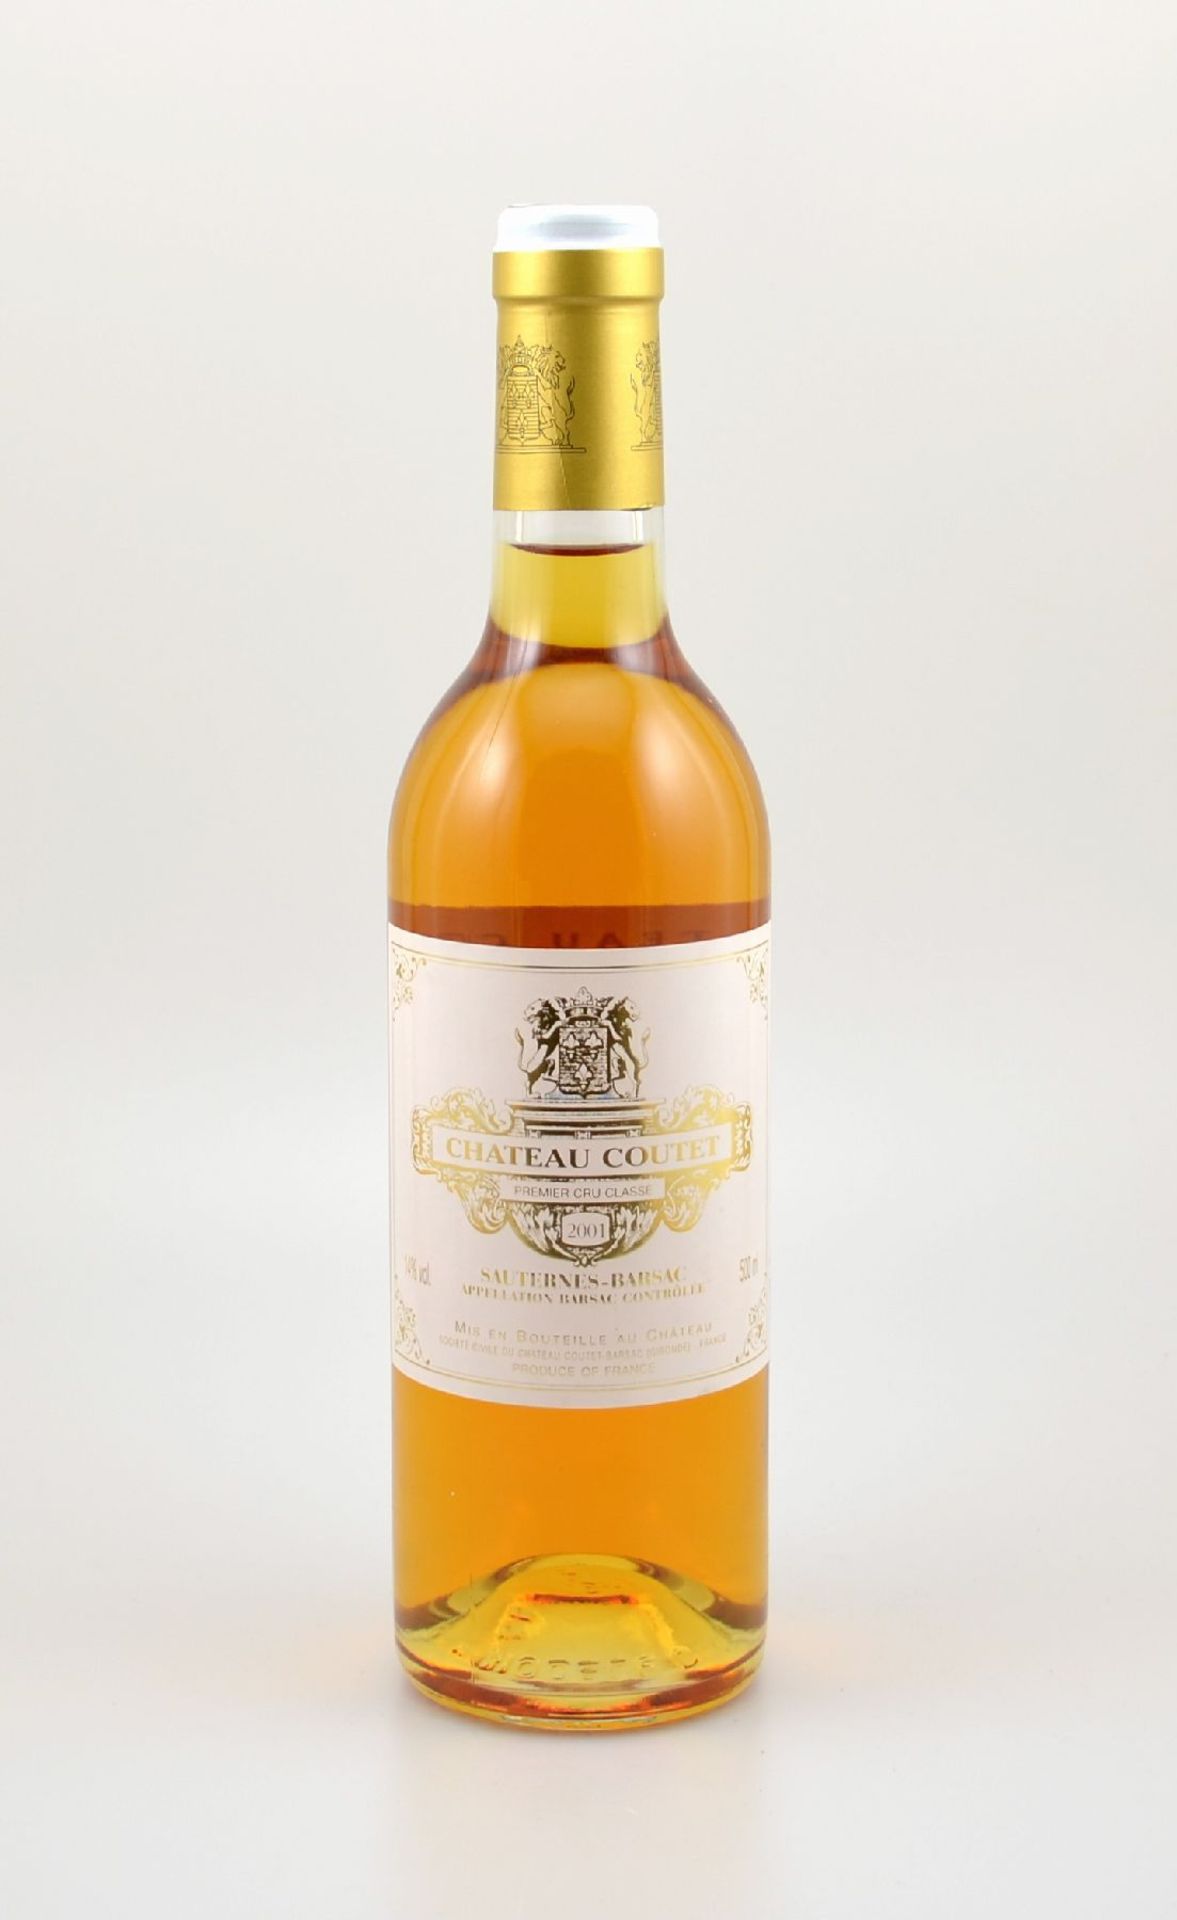 1 Flasche 2001 Chateau Coutet, Sauternes-Barsac, Premier Cru Classe, 50 cl, 14 % Vol., Füllstand: